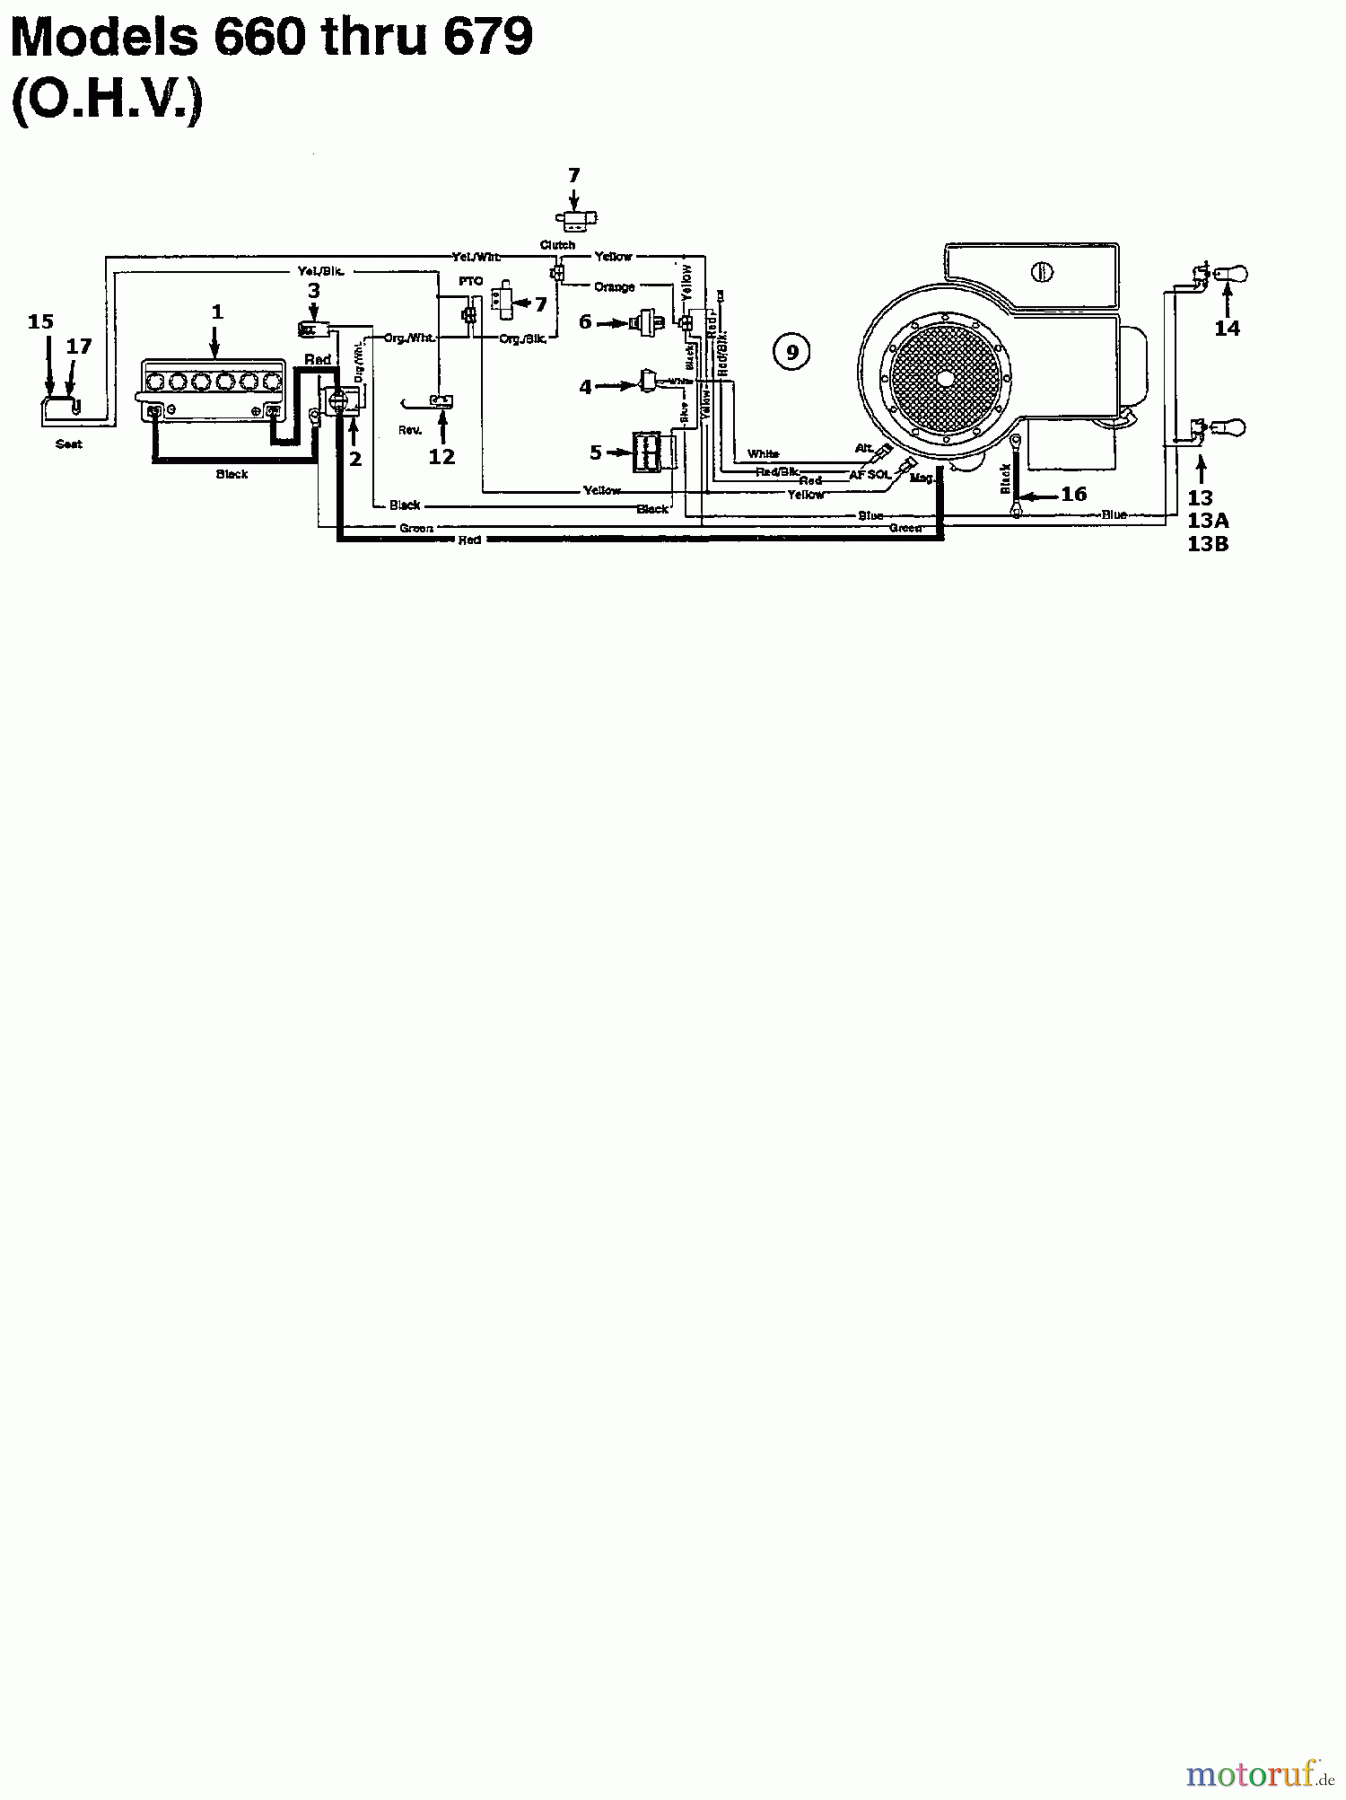  MTD Lawn tractors 12/76 HN 134K671C638  (1994) Wiring diagram for O.H.V.